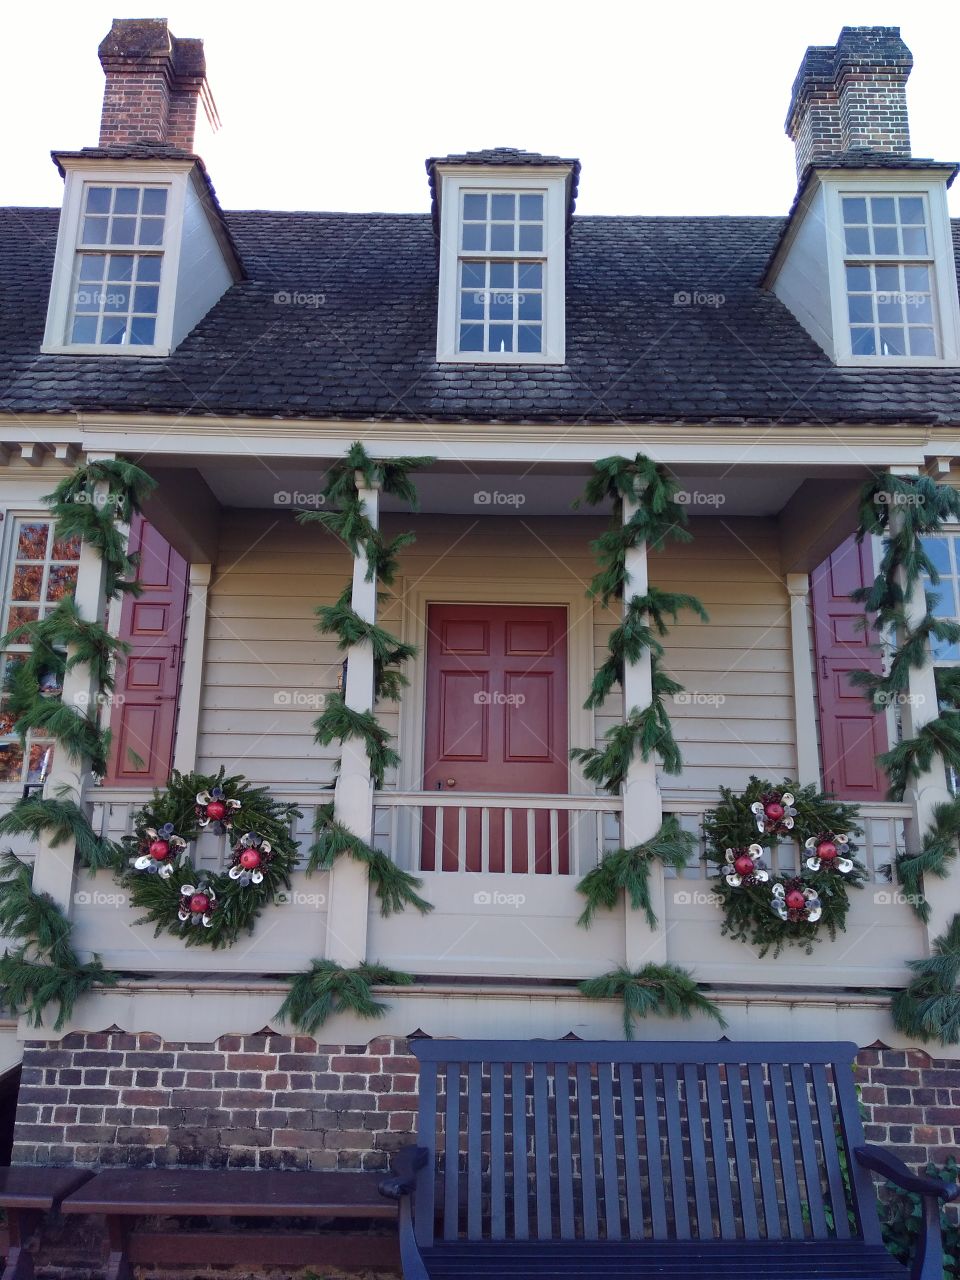 Colonial Williamsburg, Virginia. Holiday decorations.